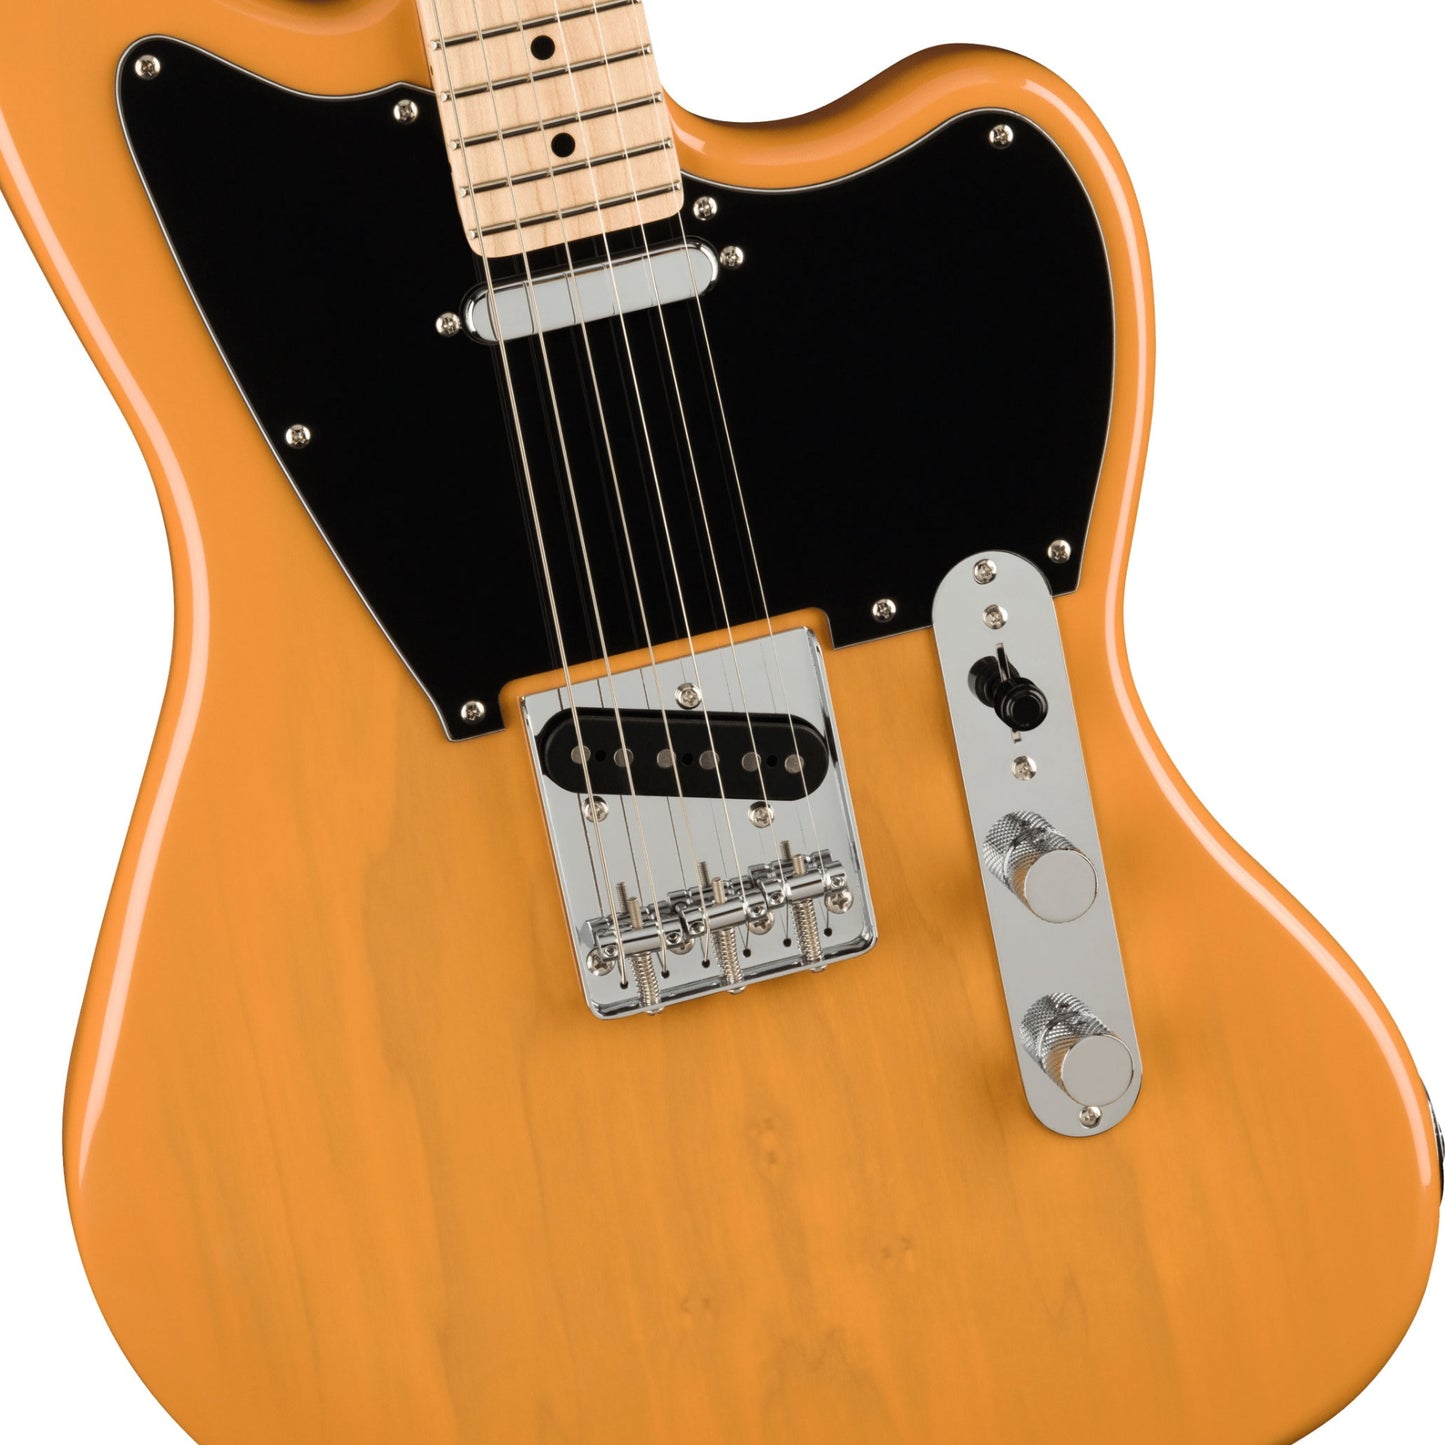 Squier Paranormal Series Offset Telecaster Electric Guitar - Butterscotch Blonde